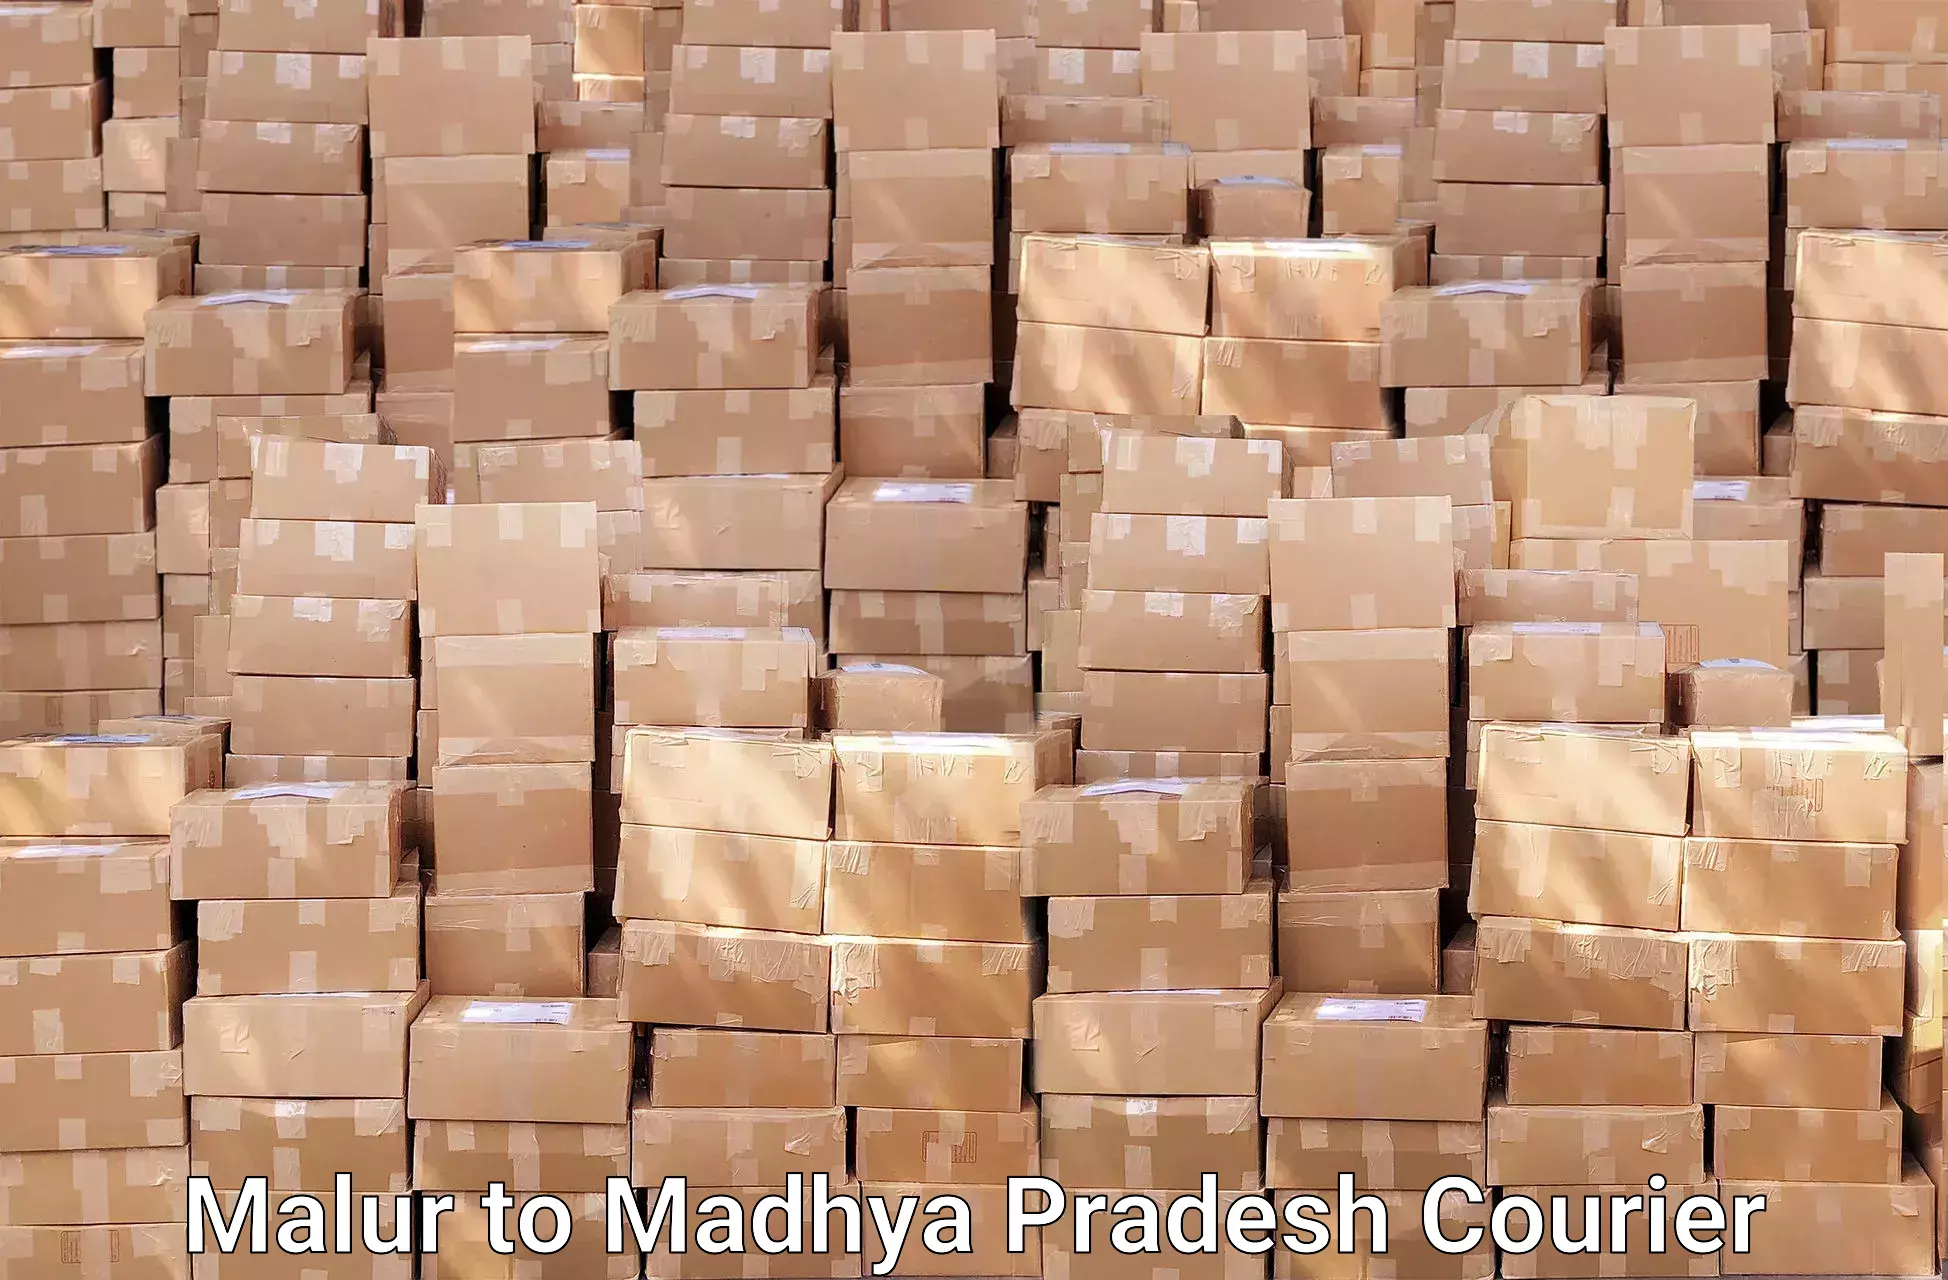 Efficient moving company Malur to Madhya Pradesh